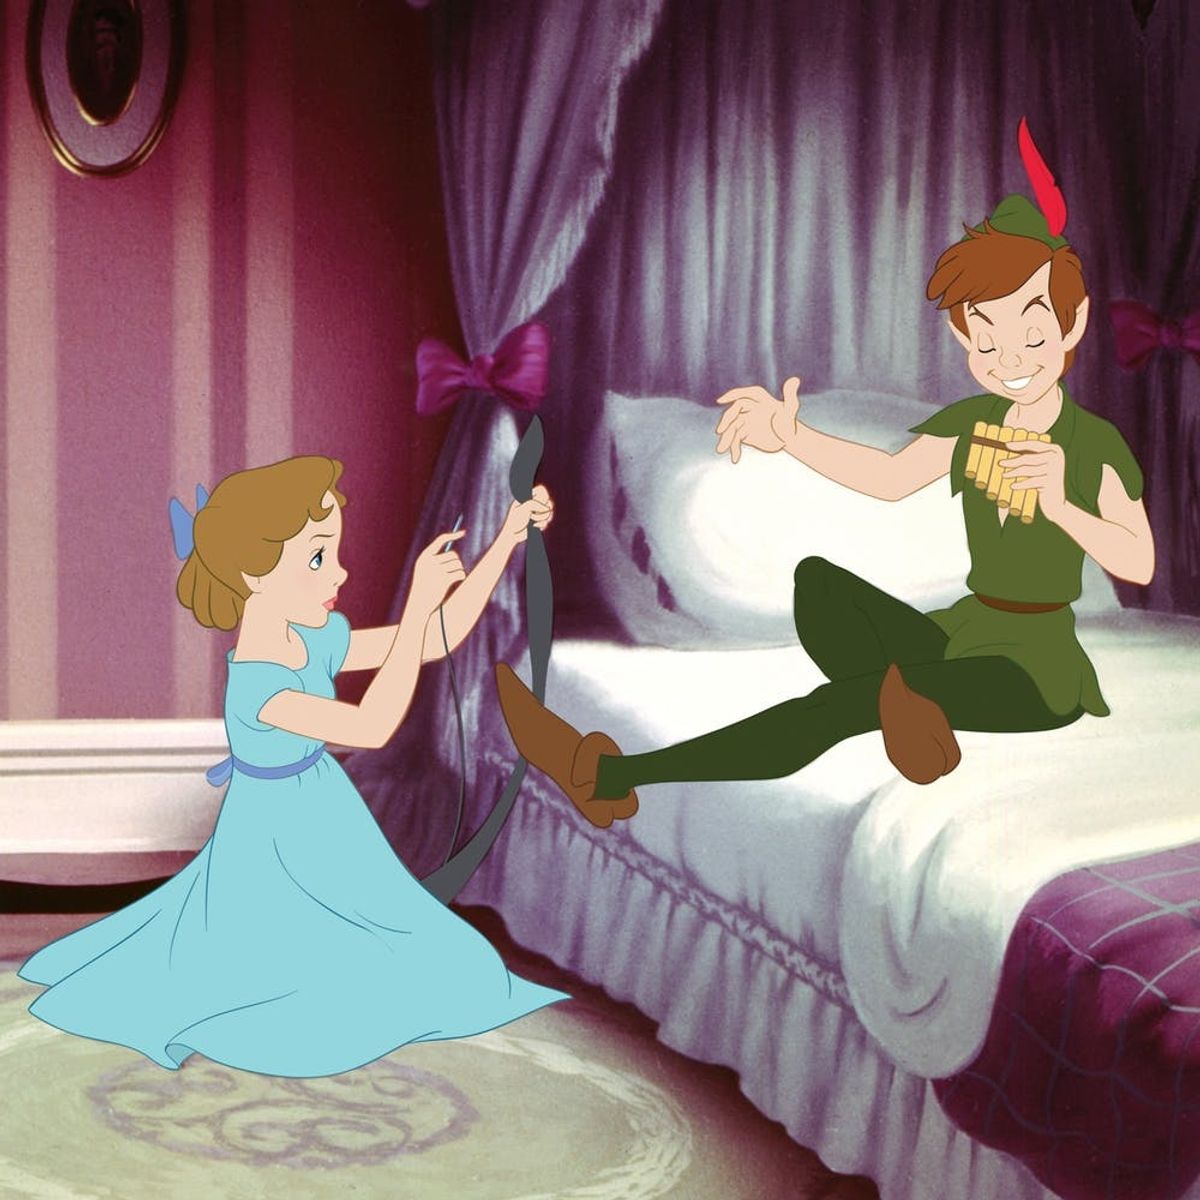 Disney Legend Kathryn Beaumont Takes Us Behind the Scenes of ‘Peter Pan’